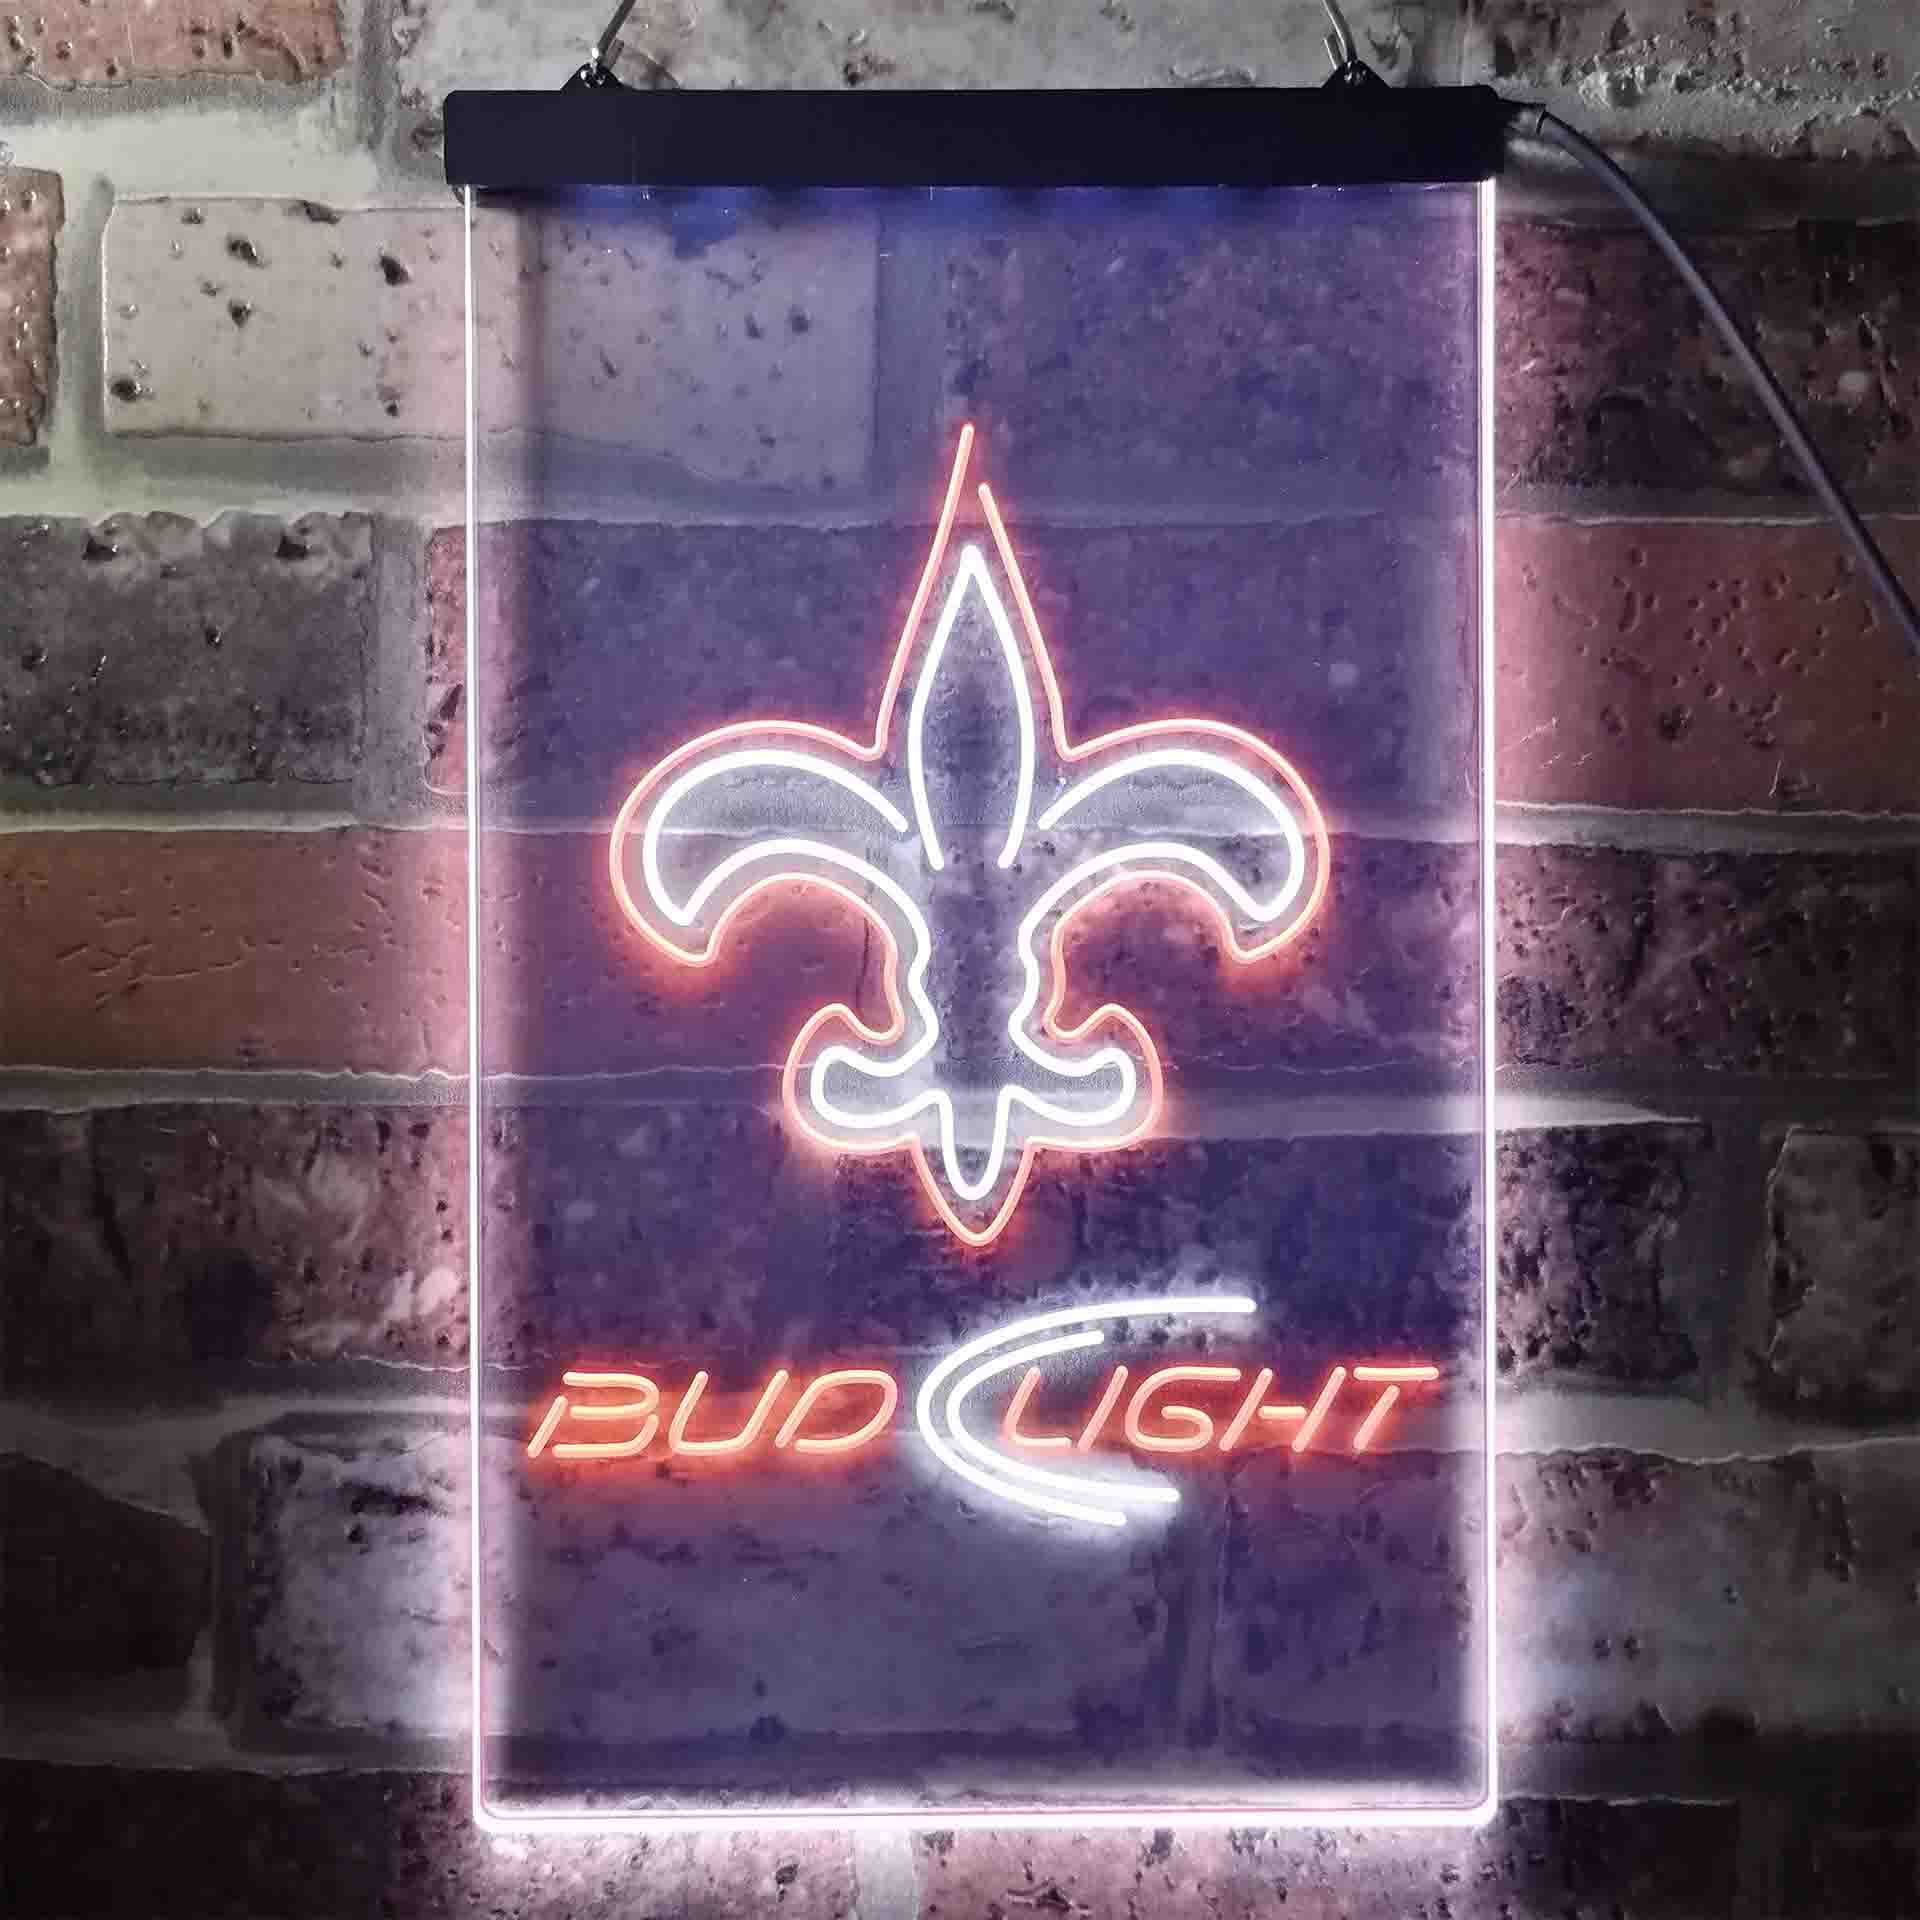 New Orleans Saints Bud Light LED Neon Sign